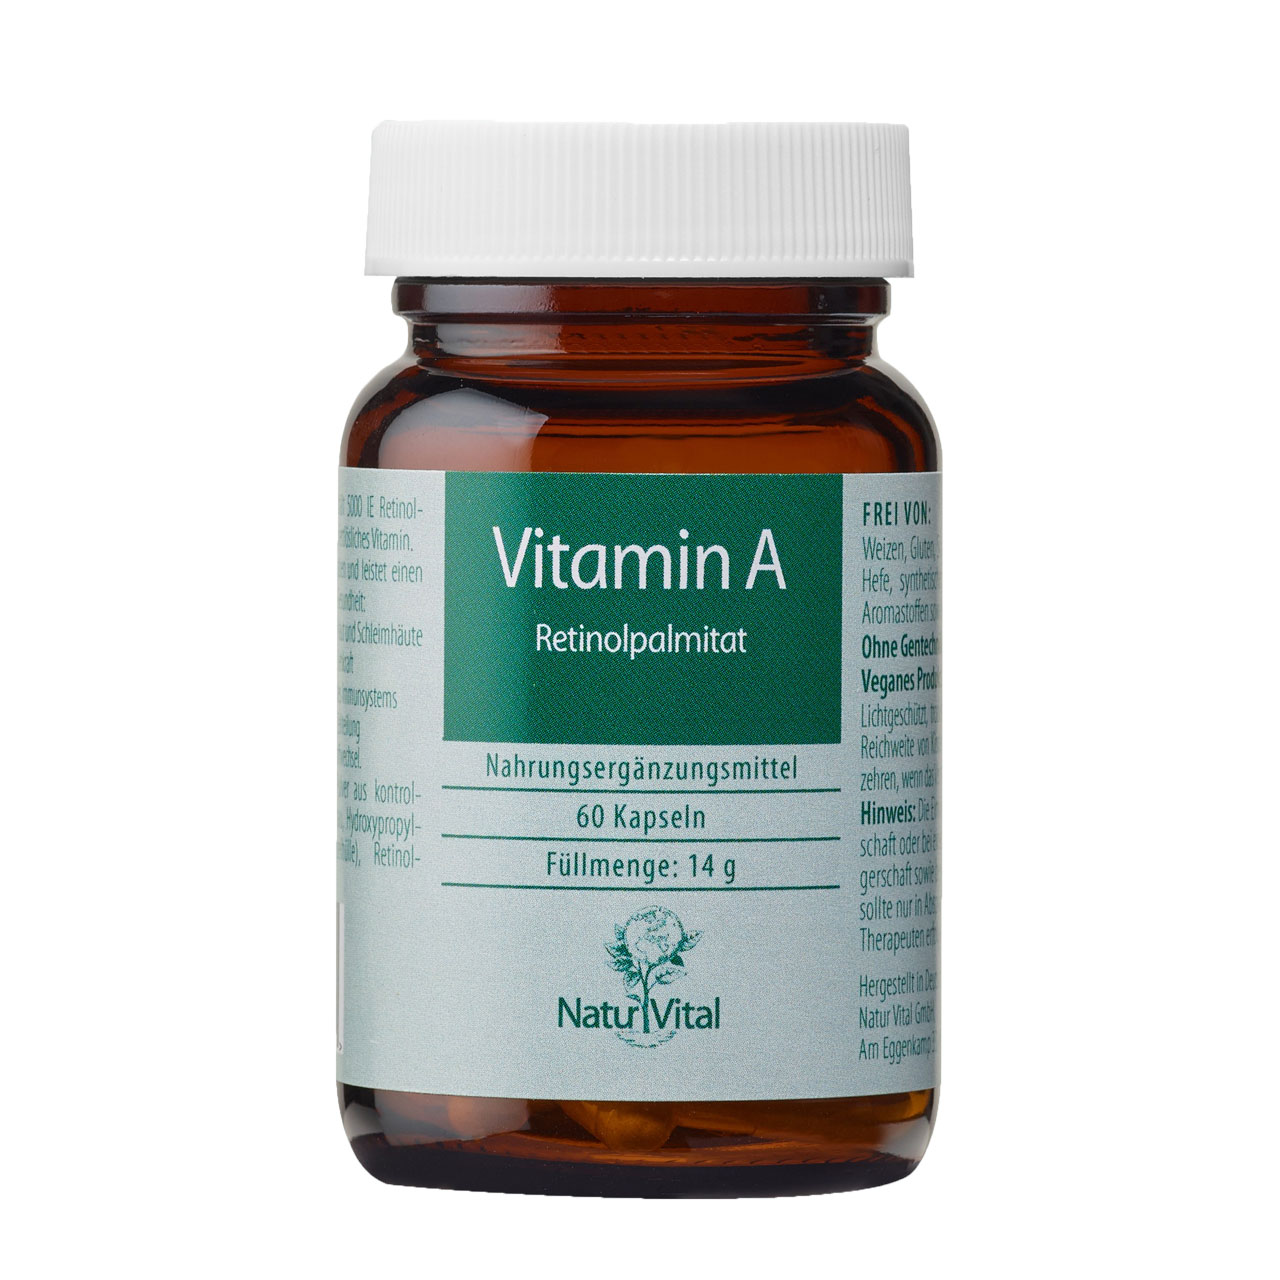 Vitamin A Retinolpalmitat von Natur Vital beinhaltet 60 Kapseln